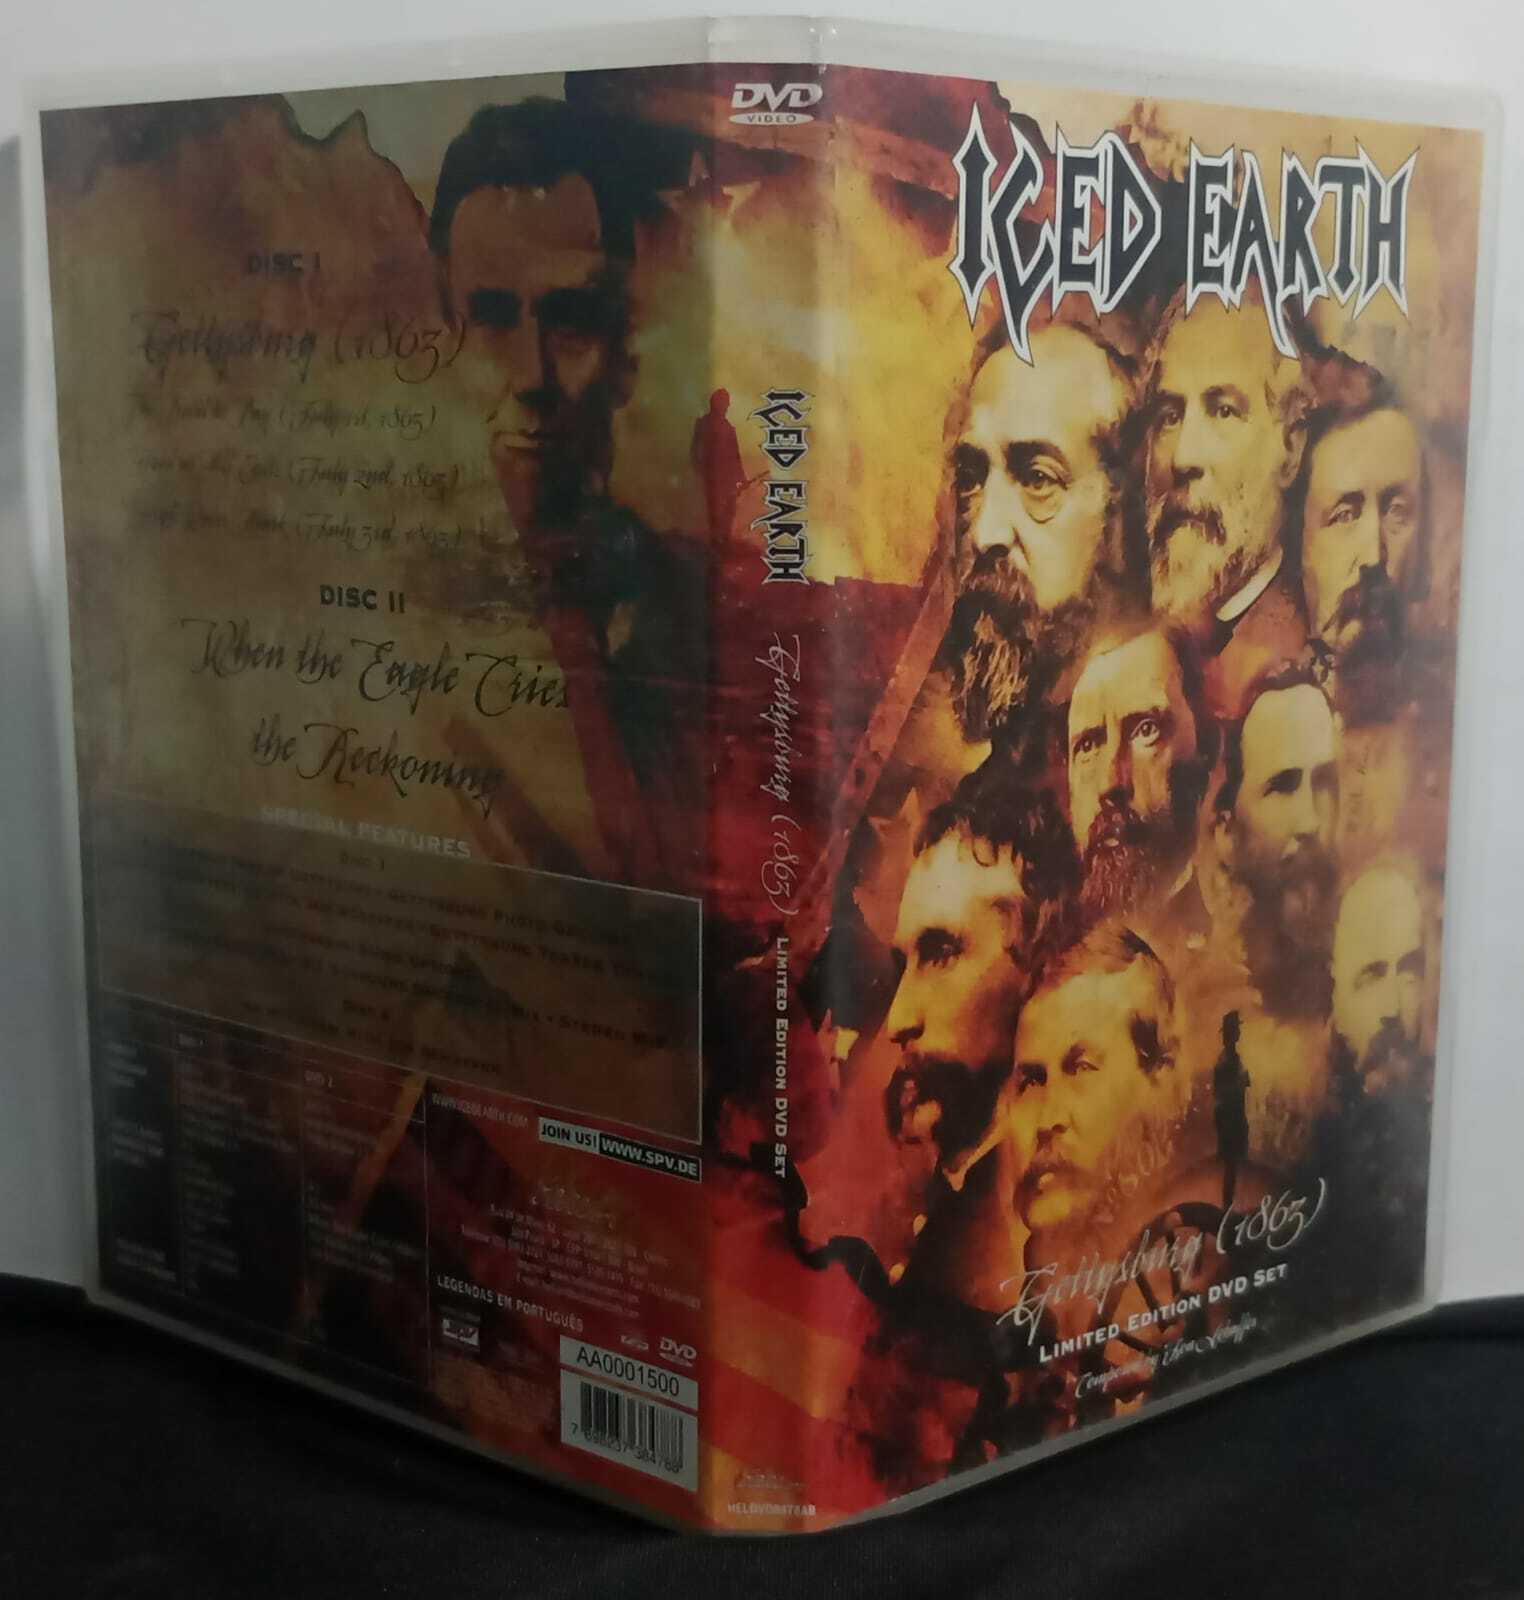 DVD - Iced Earth - Gettysburg 1863 (duplo)